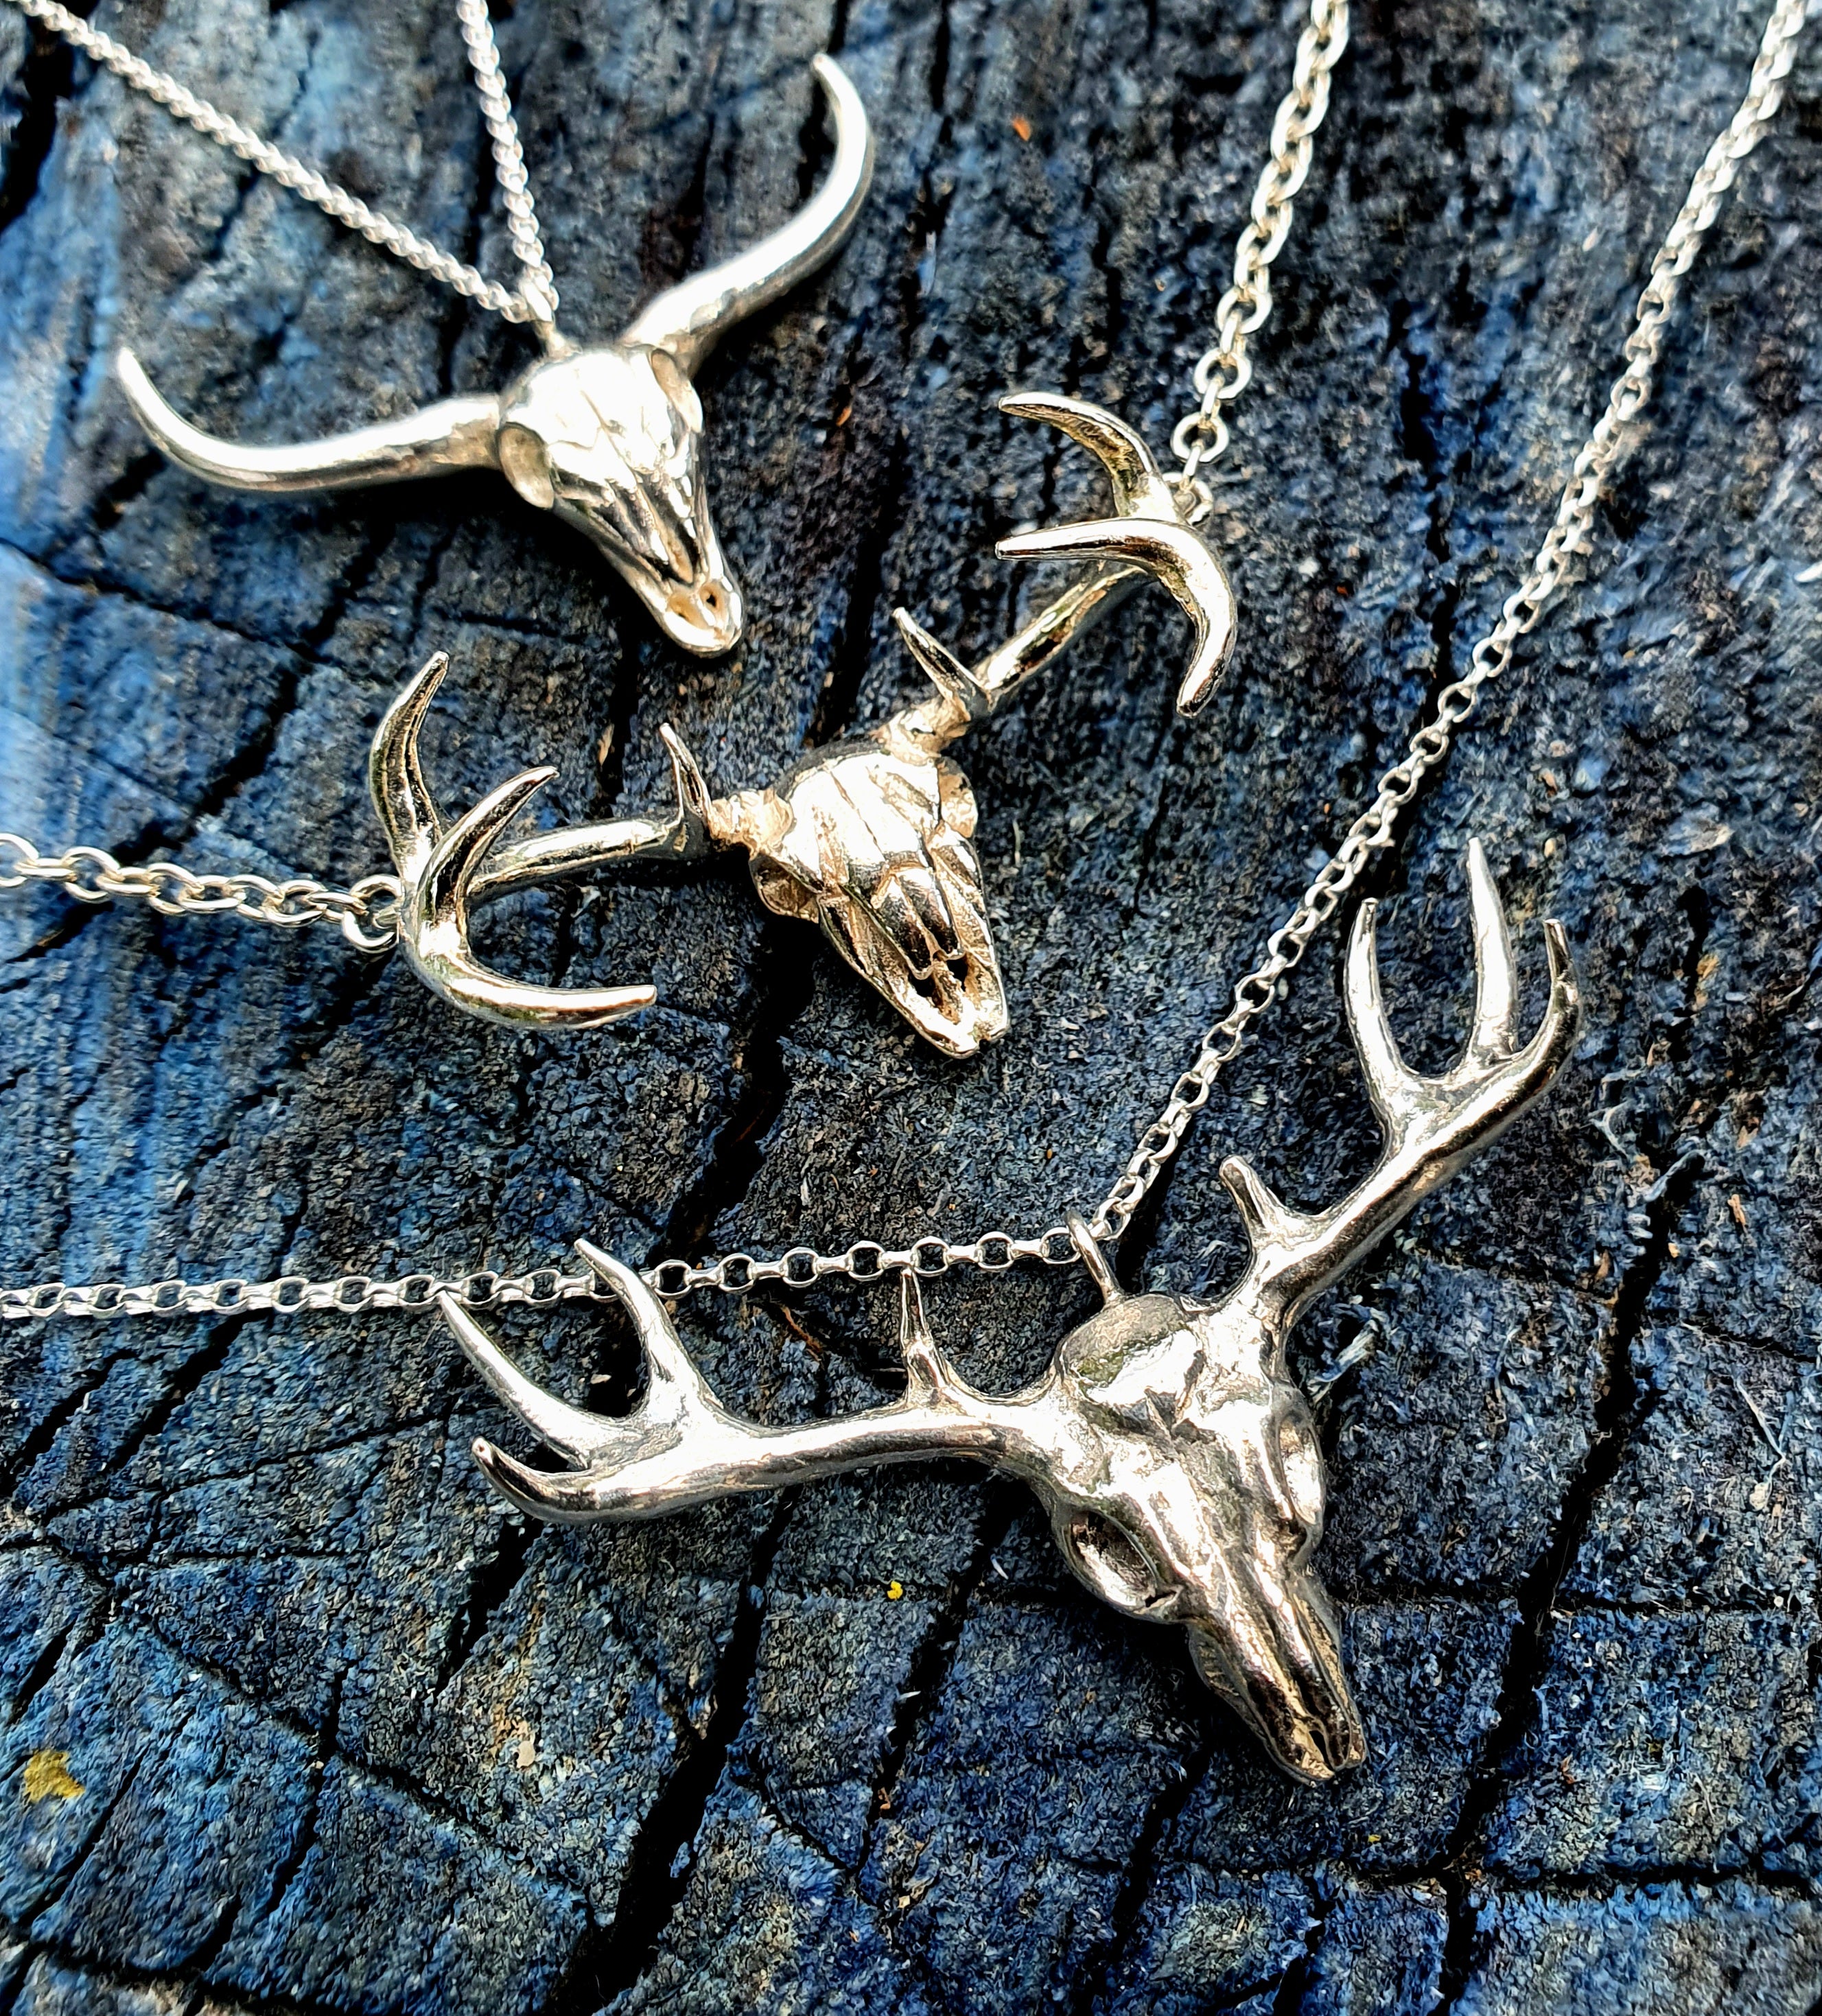 Oisín, 'little deer' - sterling silver deer skull